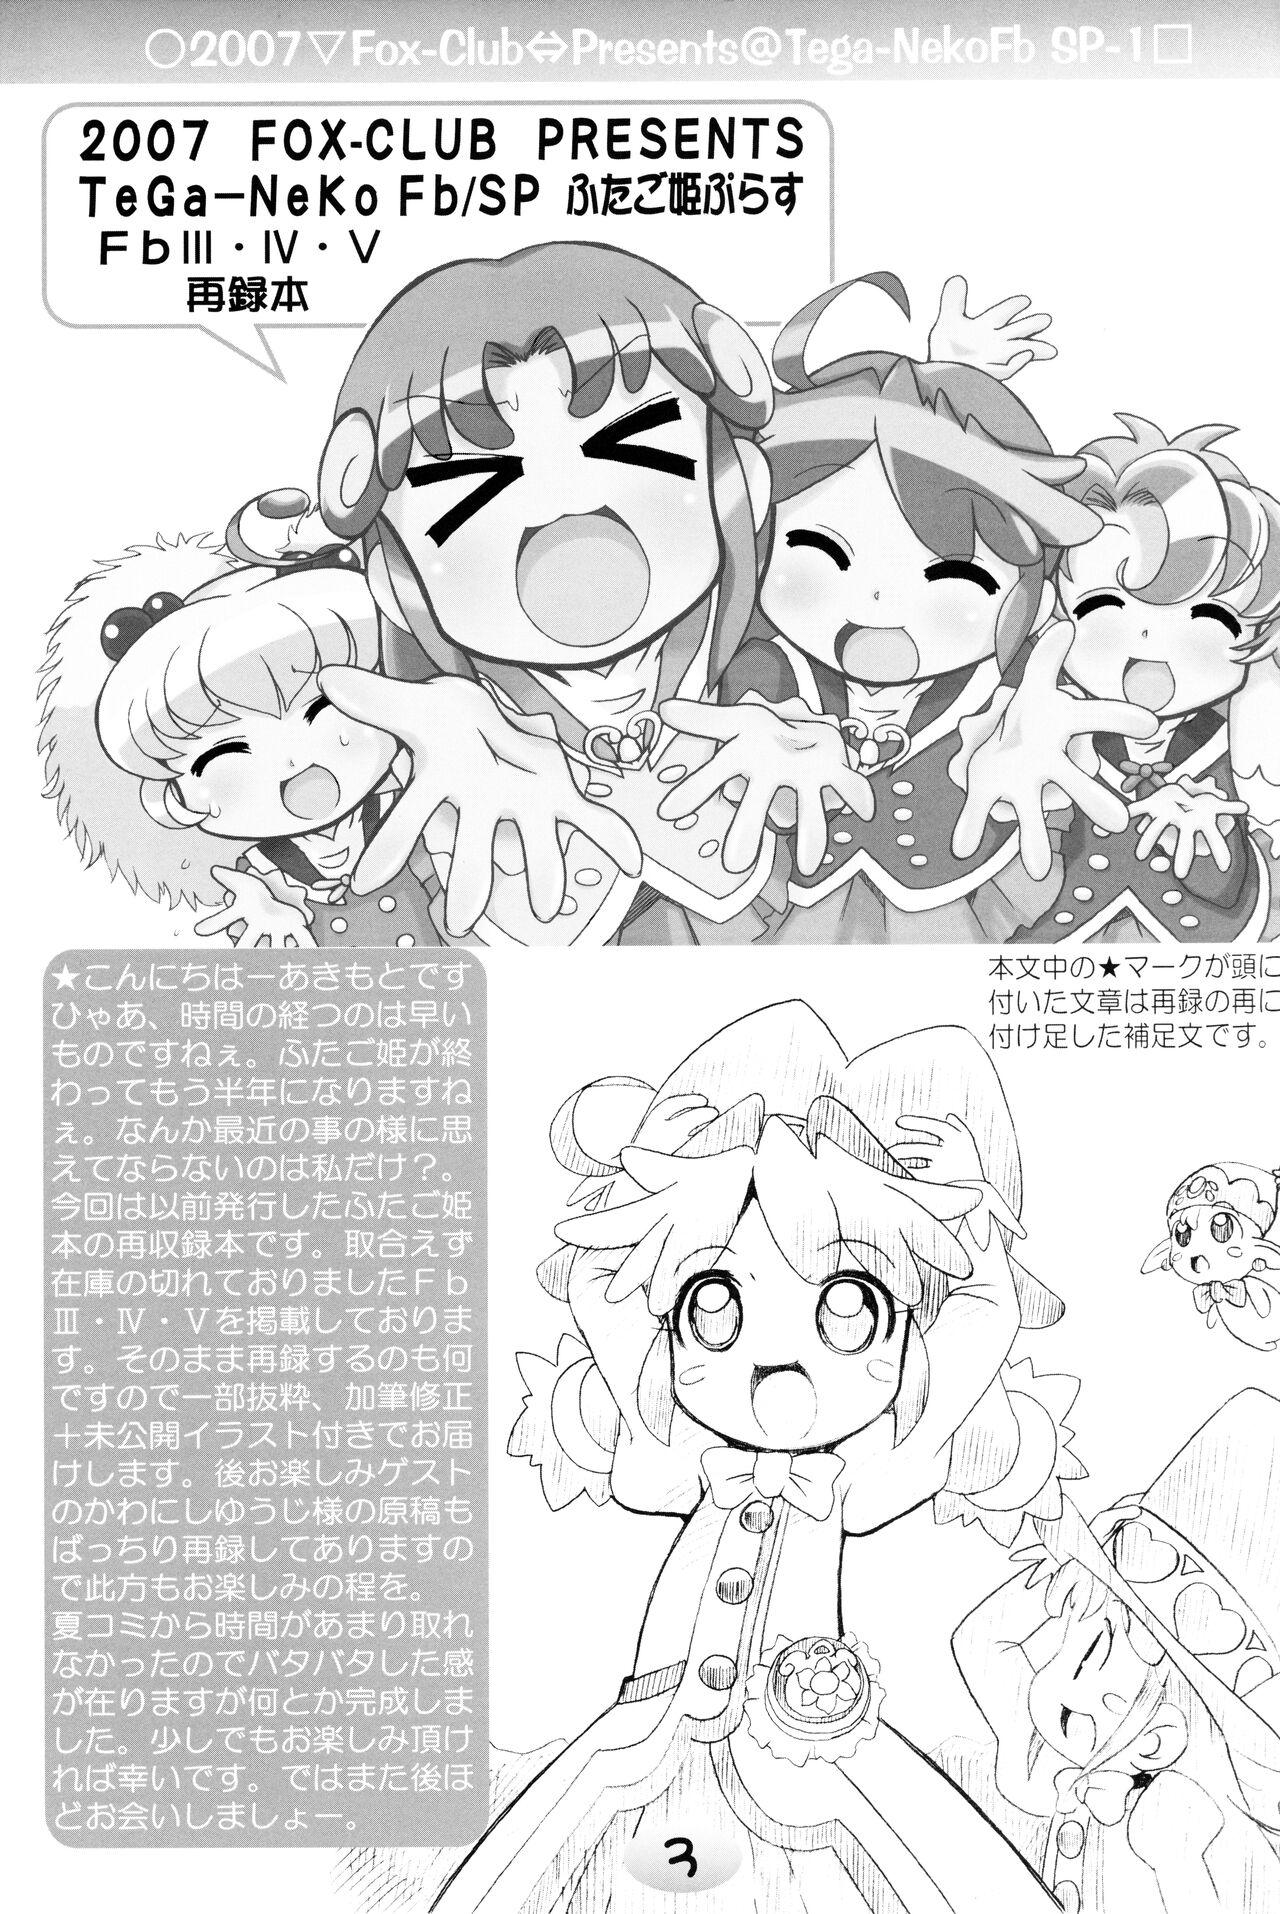 Blowing TeGa-NeKo Fb/SP Futago Hime Plus - Fushigiboshi no futagohime | twin princesses of the wonder planet Chat - Page 2